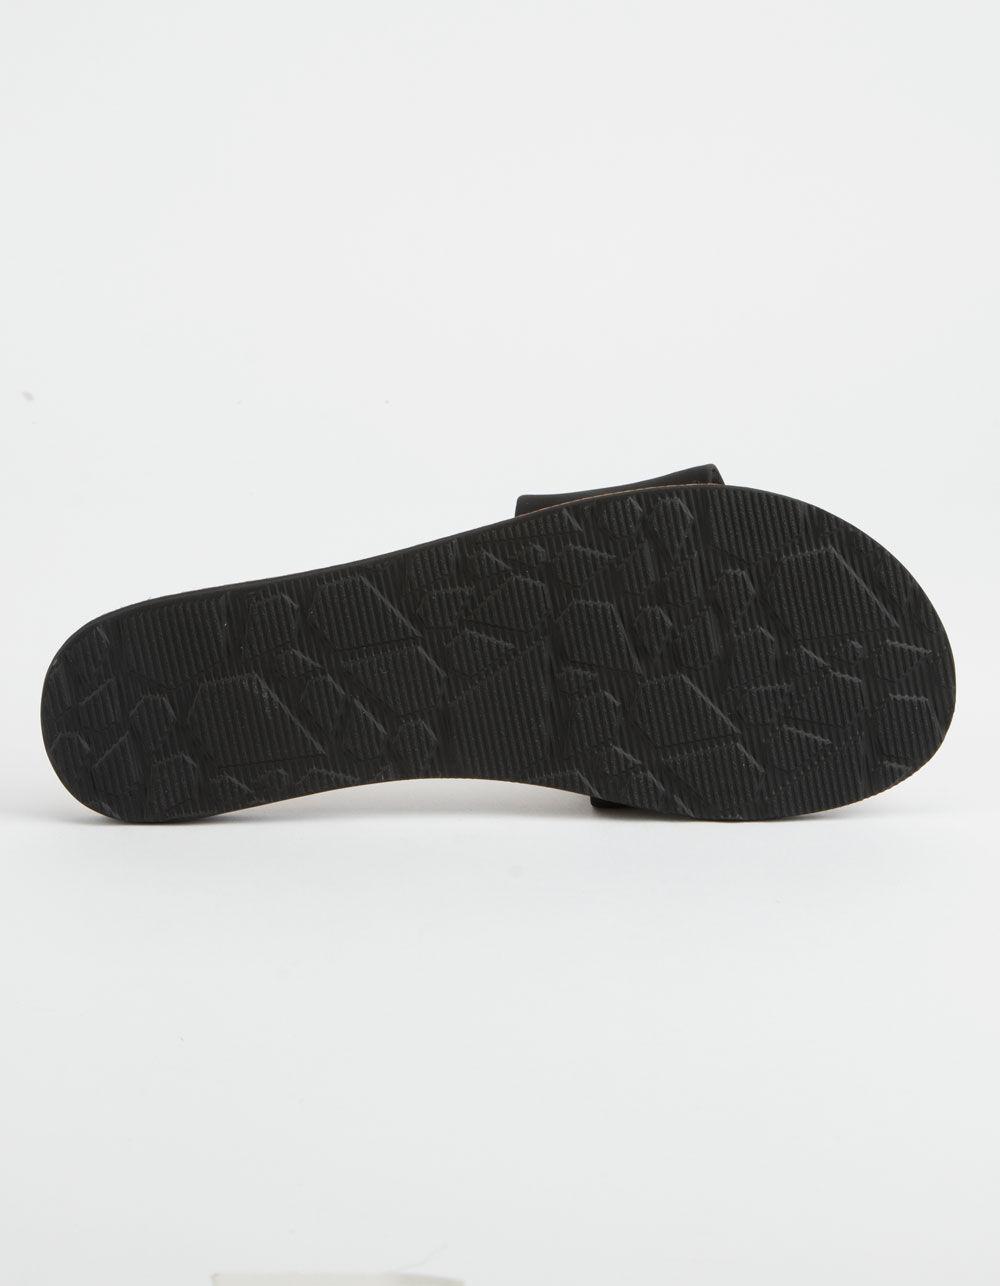 Volcom Simple Slide Black Womens Sandals - Lyst